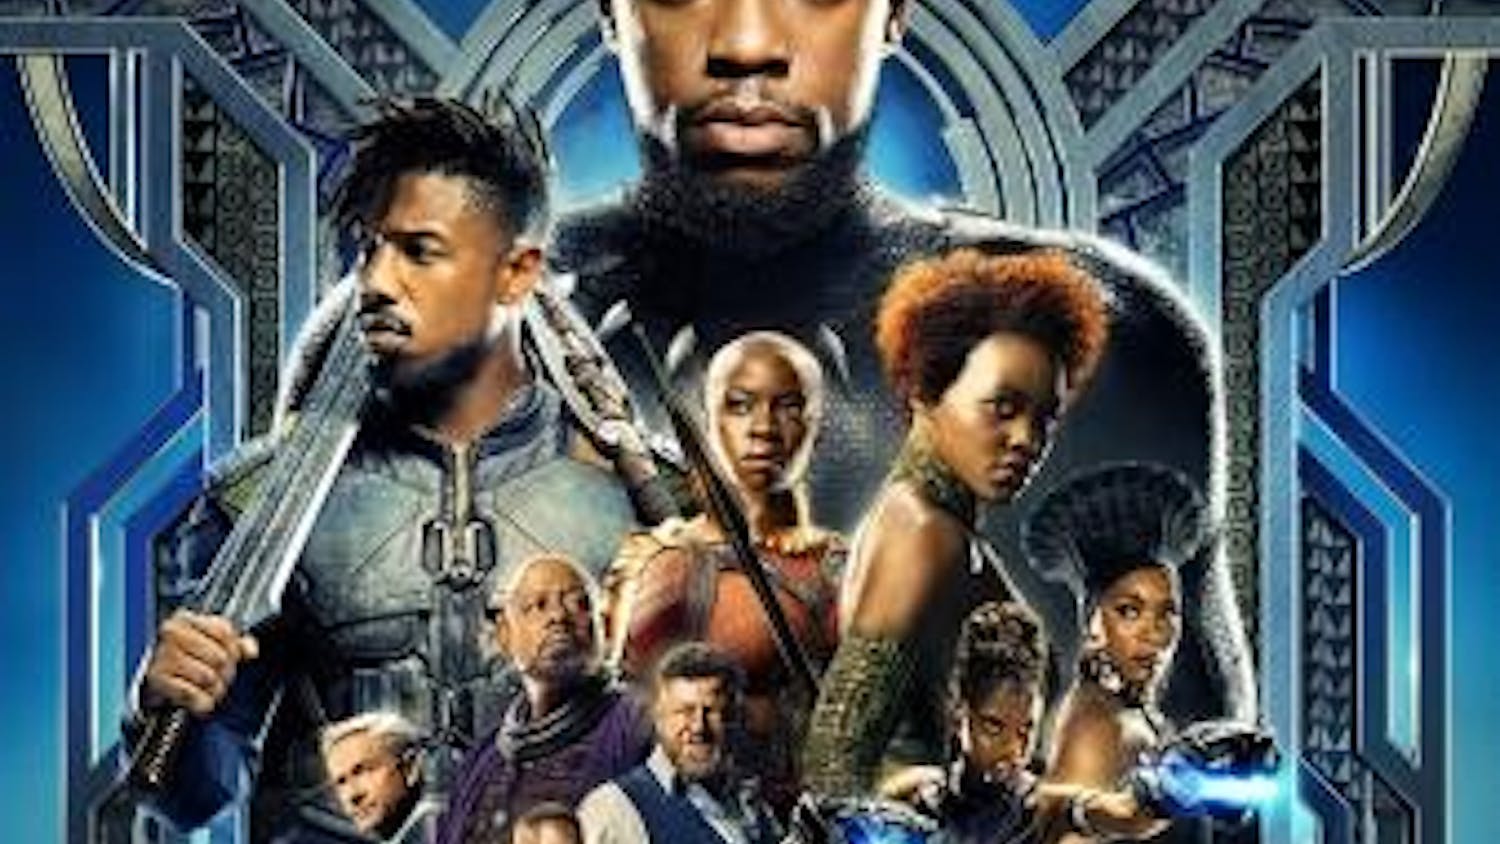 Marvel Studio's latest superhero film "Black Panther" premieres today.